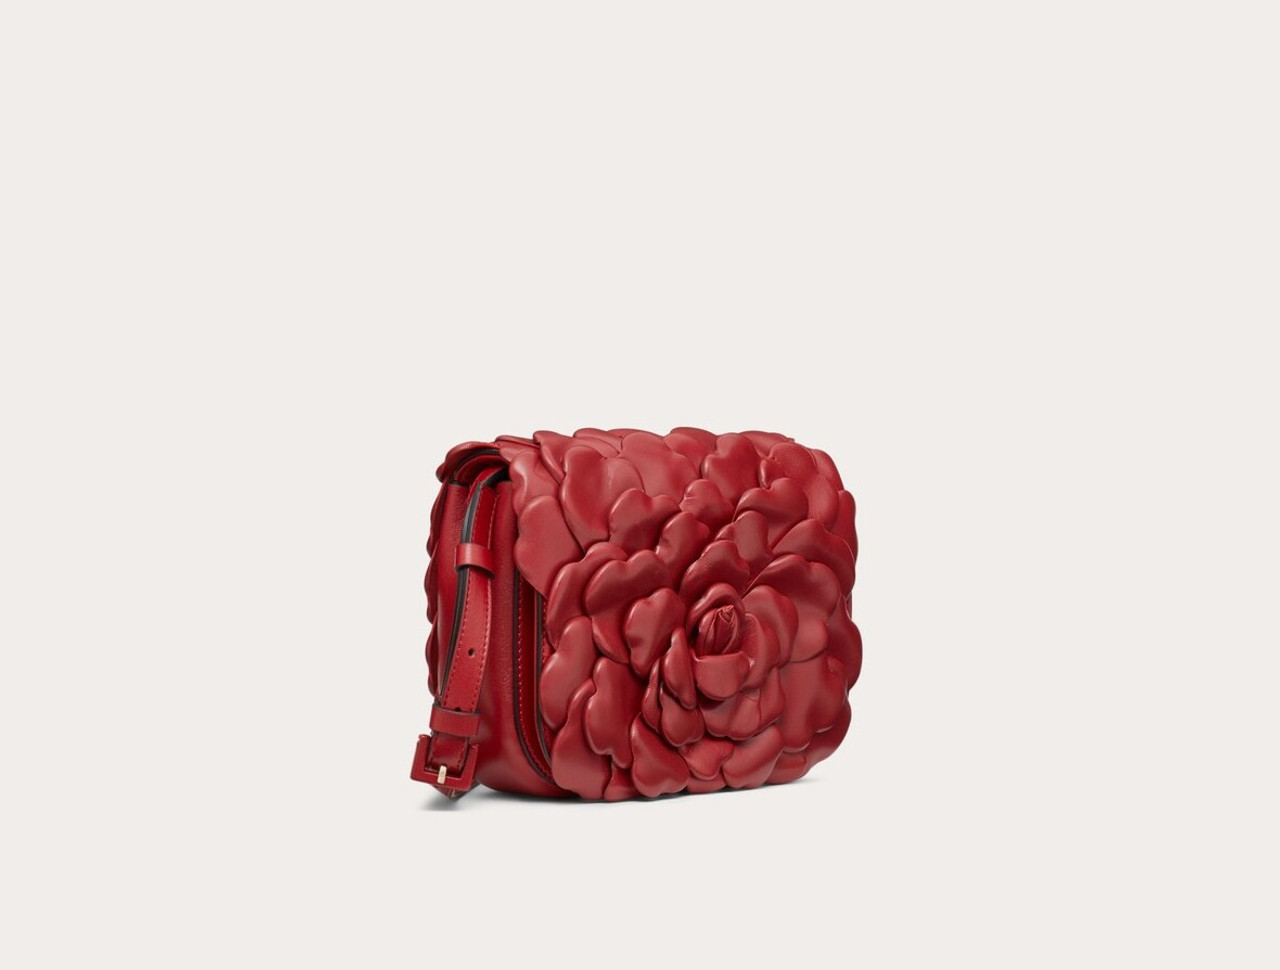 Valentino Bags Rolls Red Small Crossbody Bag – Retro Designer Wear